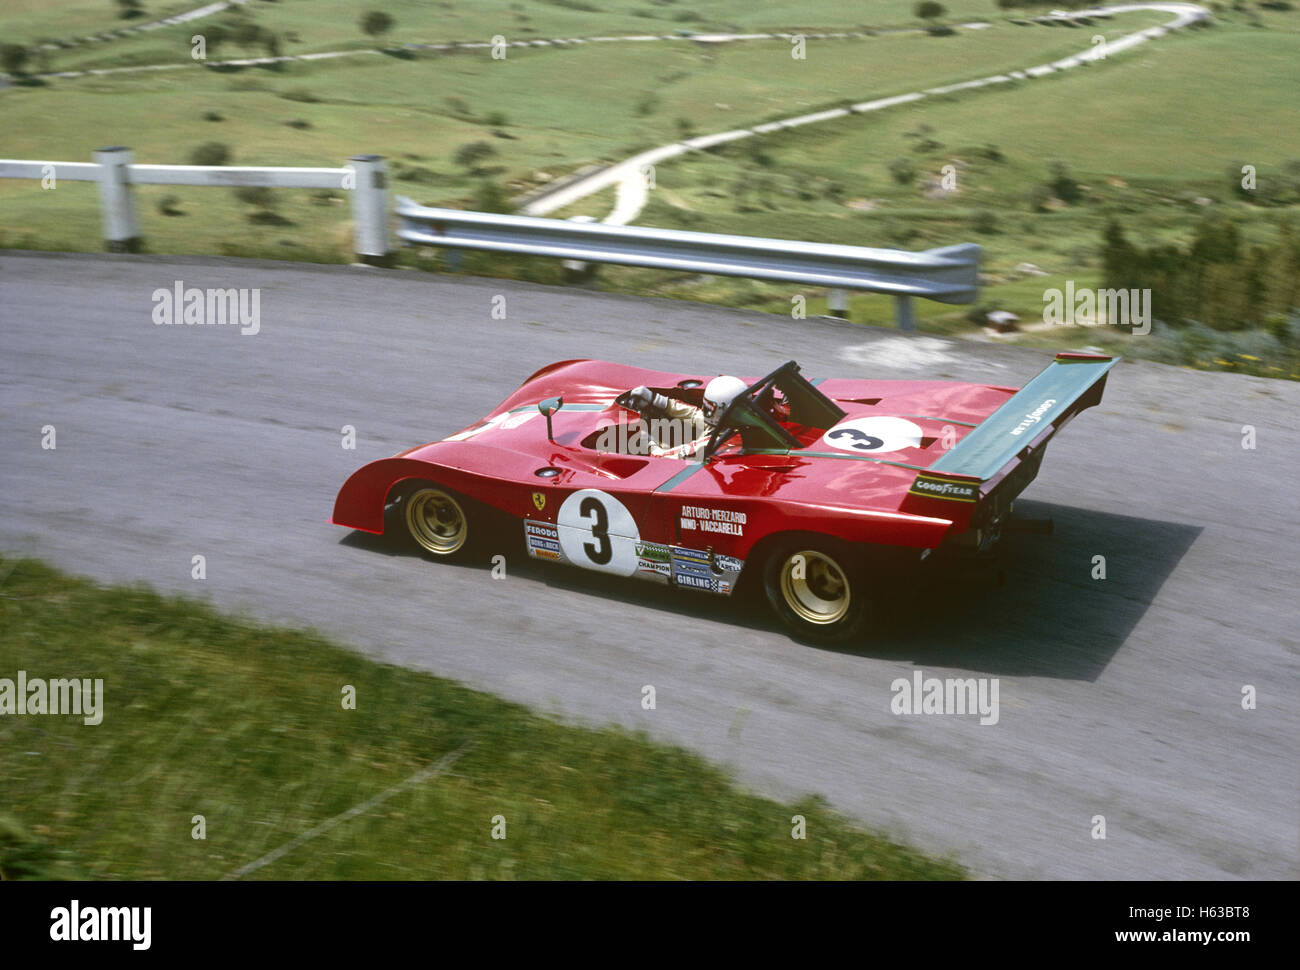 3 Arturo Merzario, Sandro Munari in una Ferrari 312 gara vincitore Targa Florio 21 Maggio 1972 Foto Stock